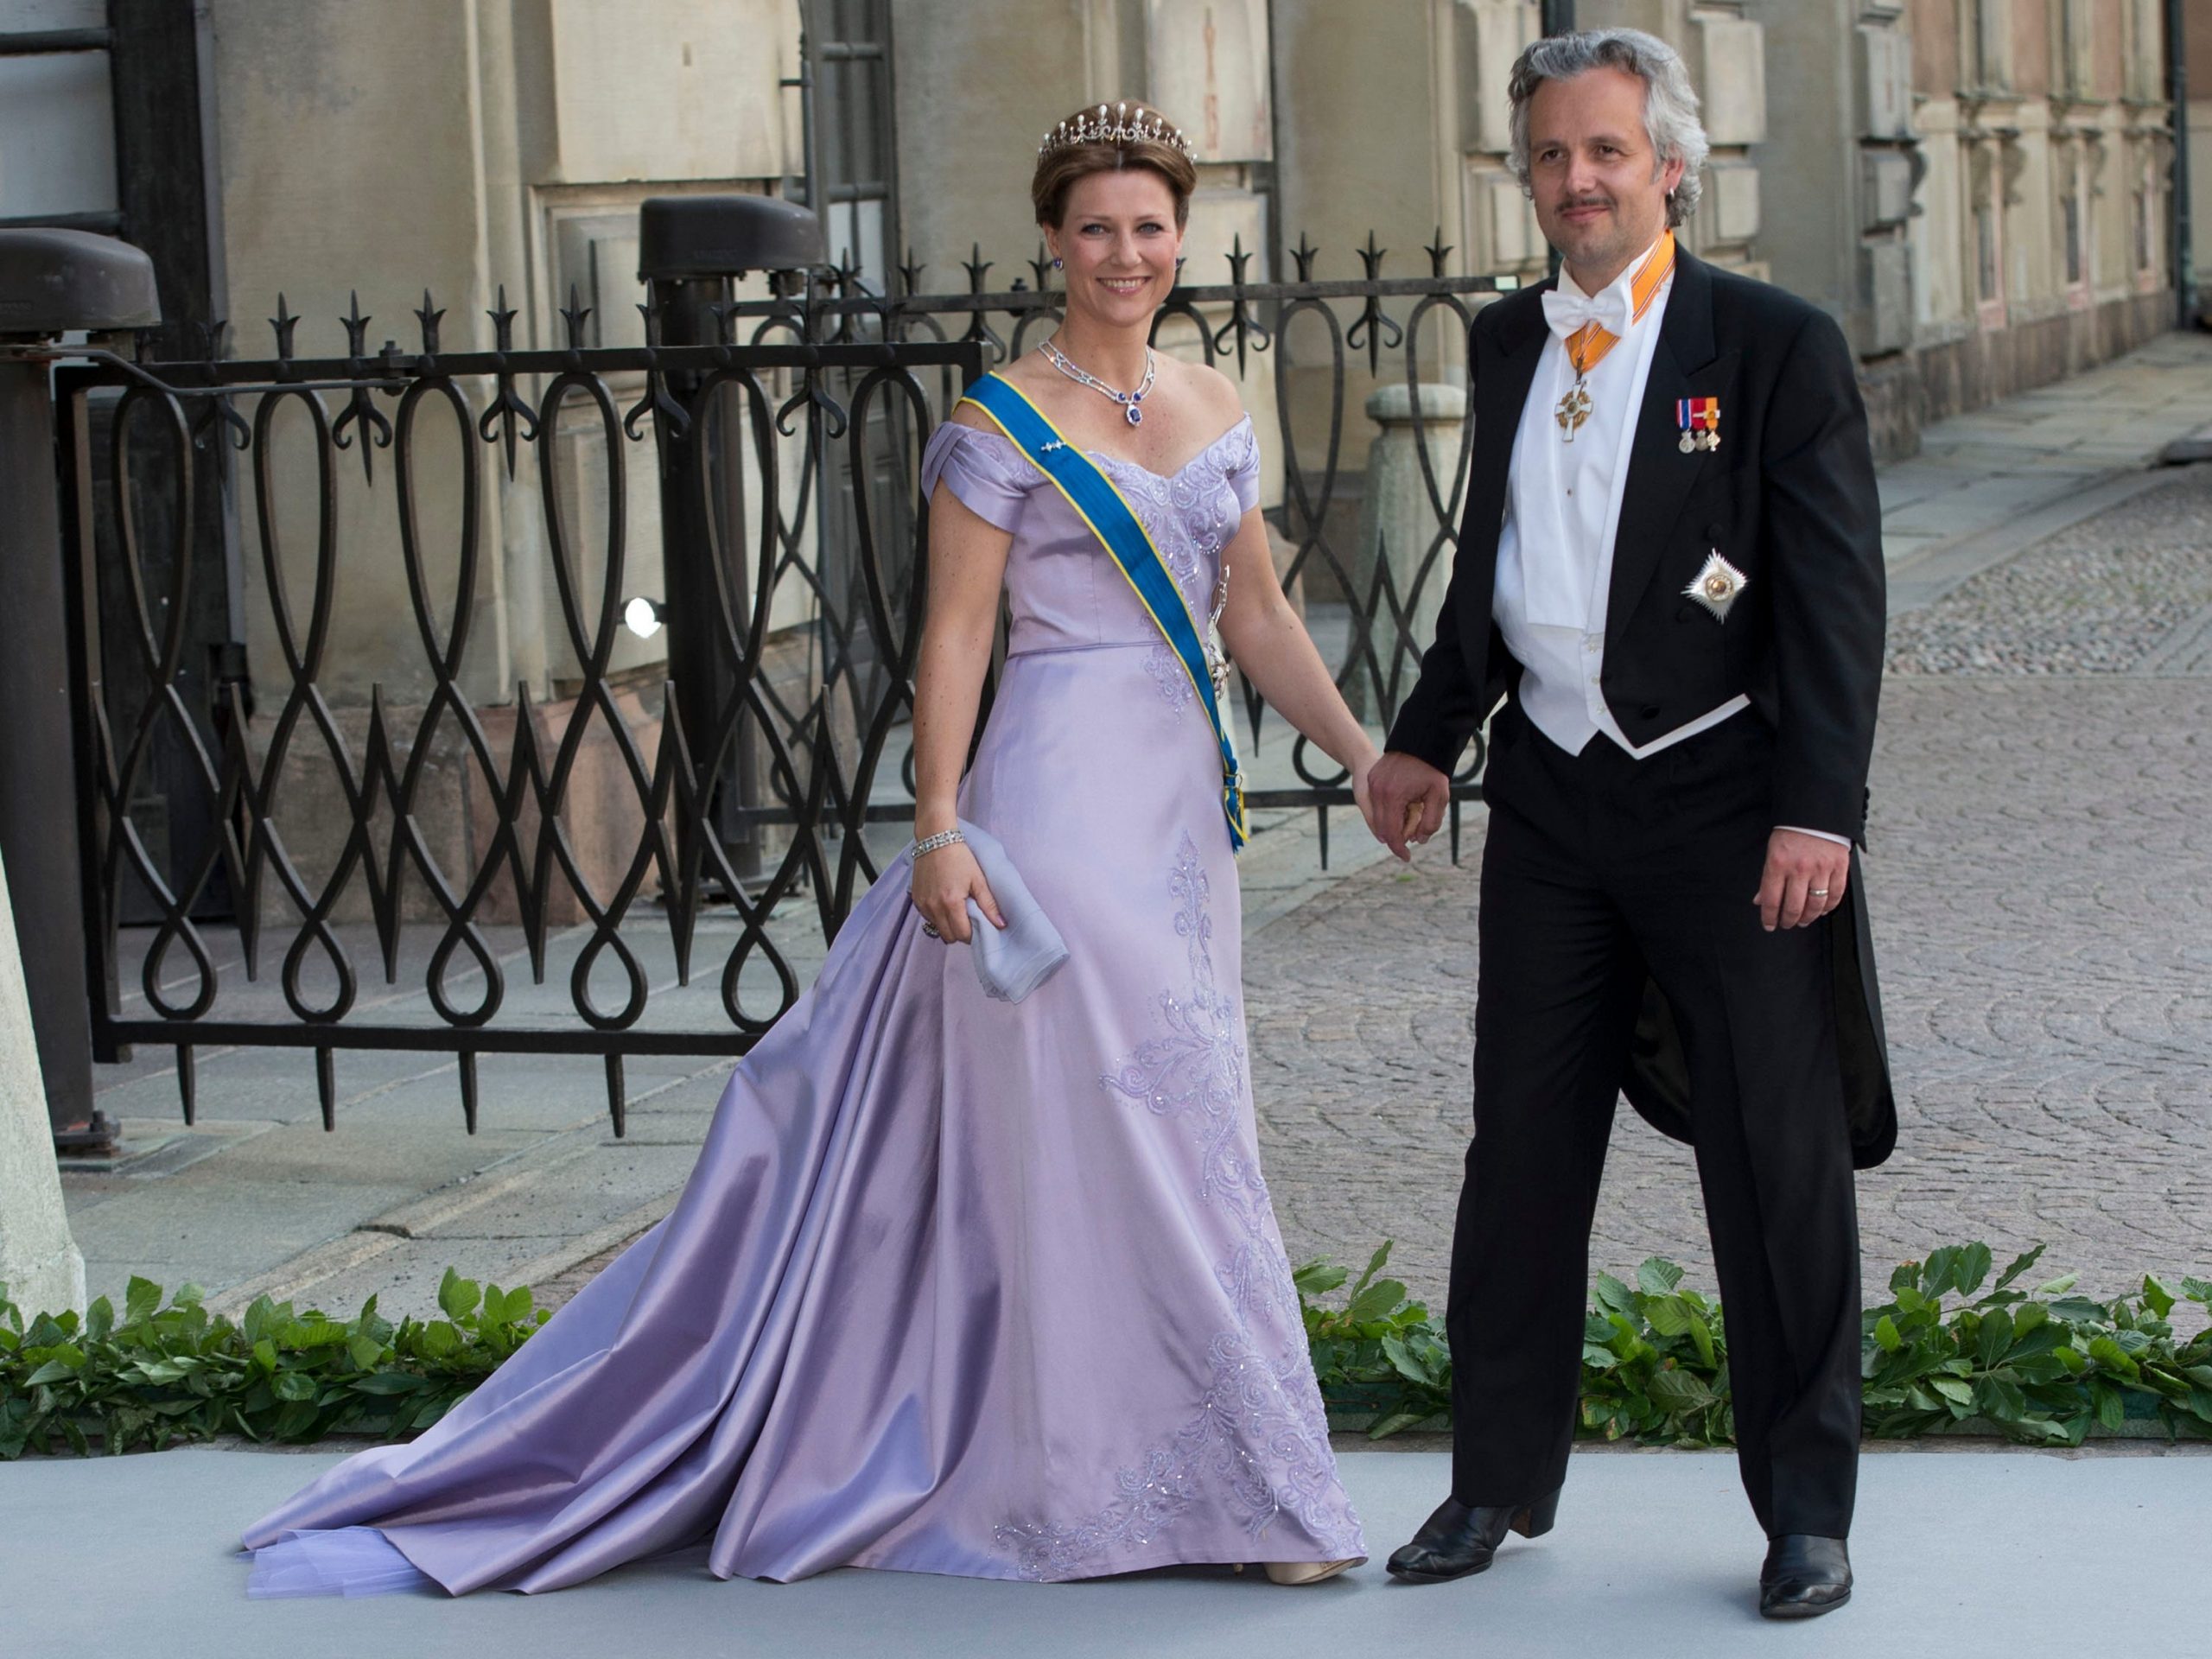 Princess Martha Louise and Ari Behn at The Royal Palace in Stockholm, Sweden.